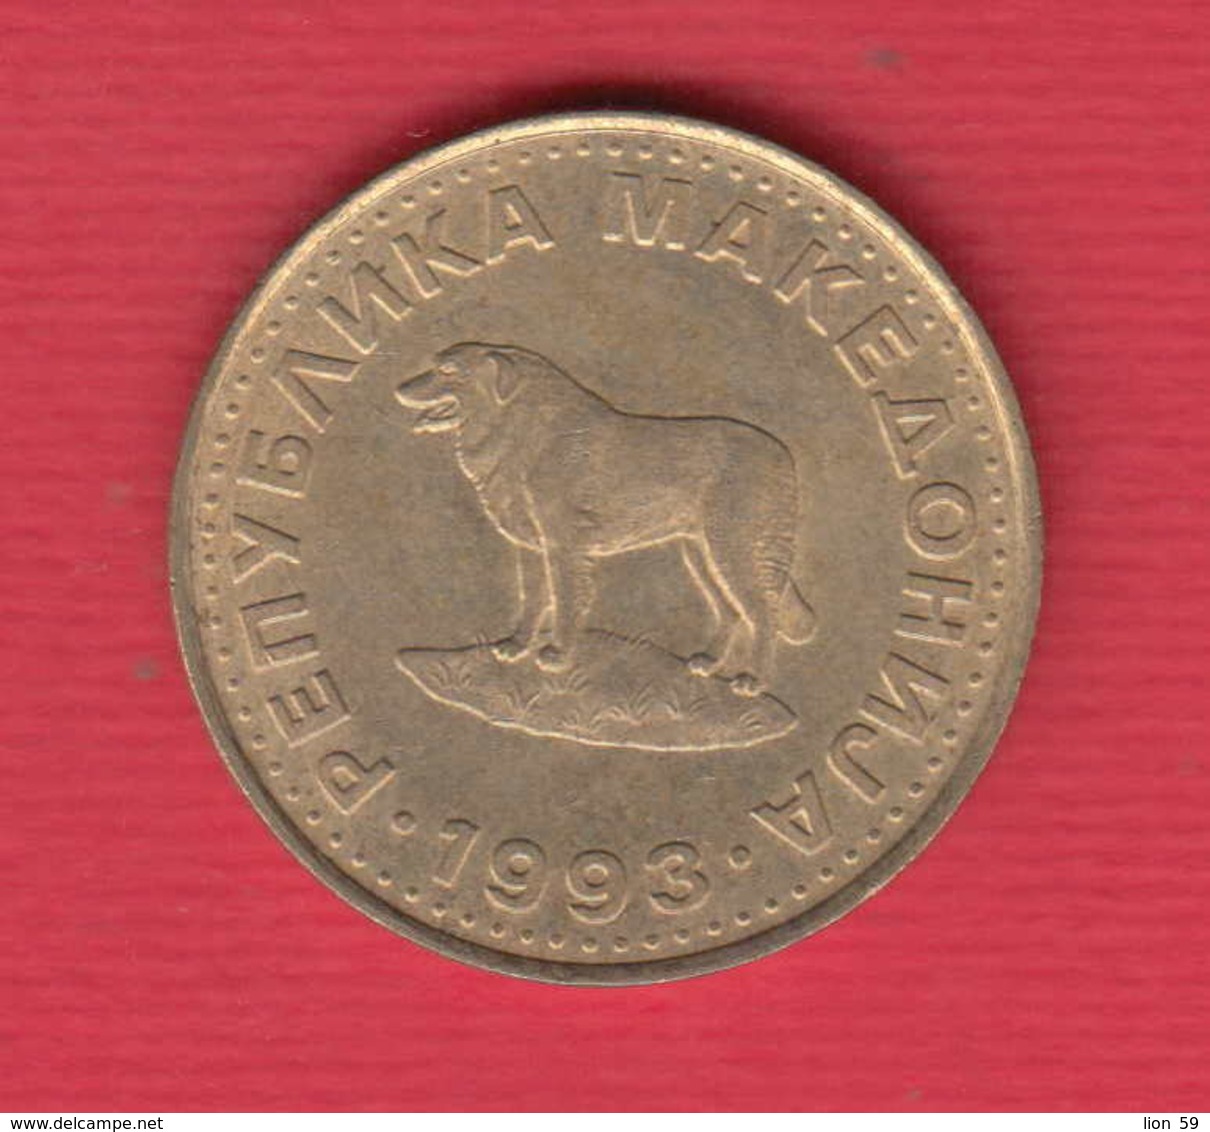 F2783A / - 1 Denar - 1993 -  Macedonia Macedoine Mazedonien - Coins Munzen Monnaies Monete - North Macedonia